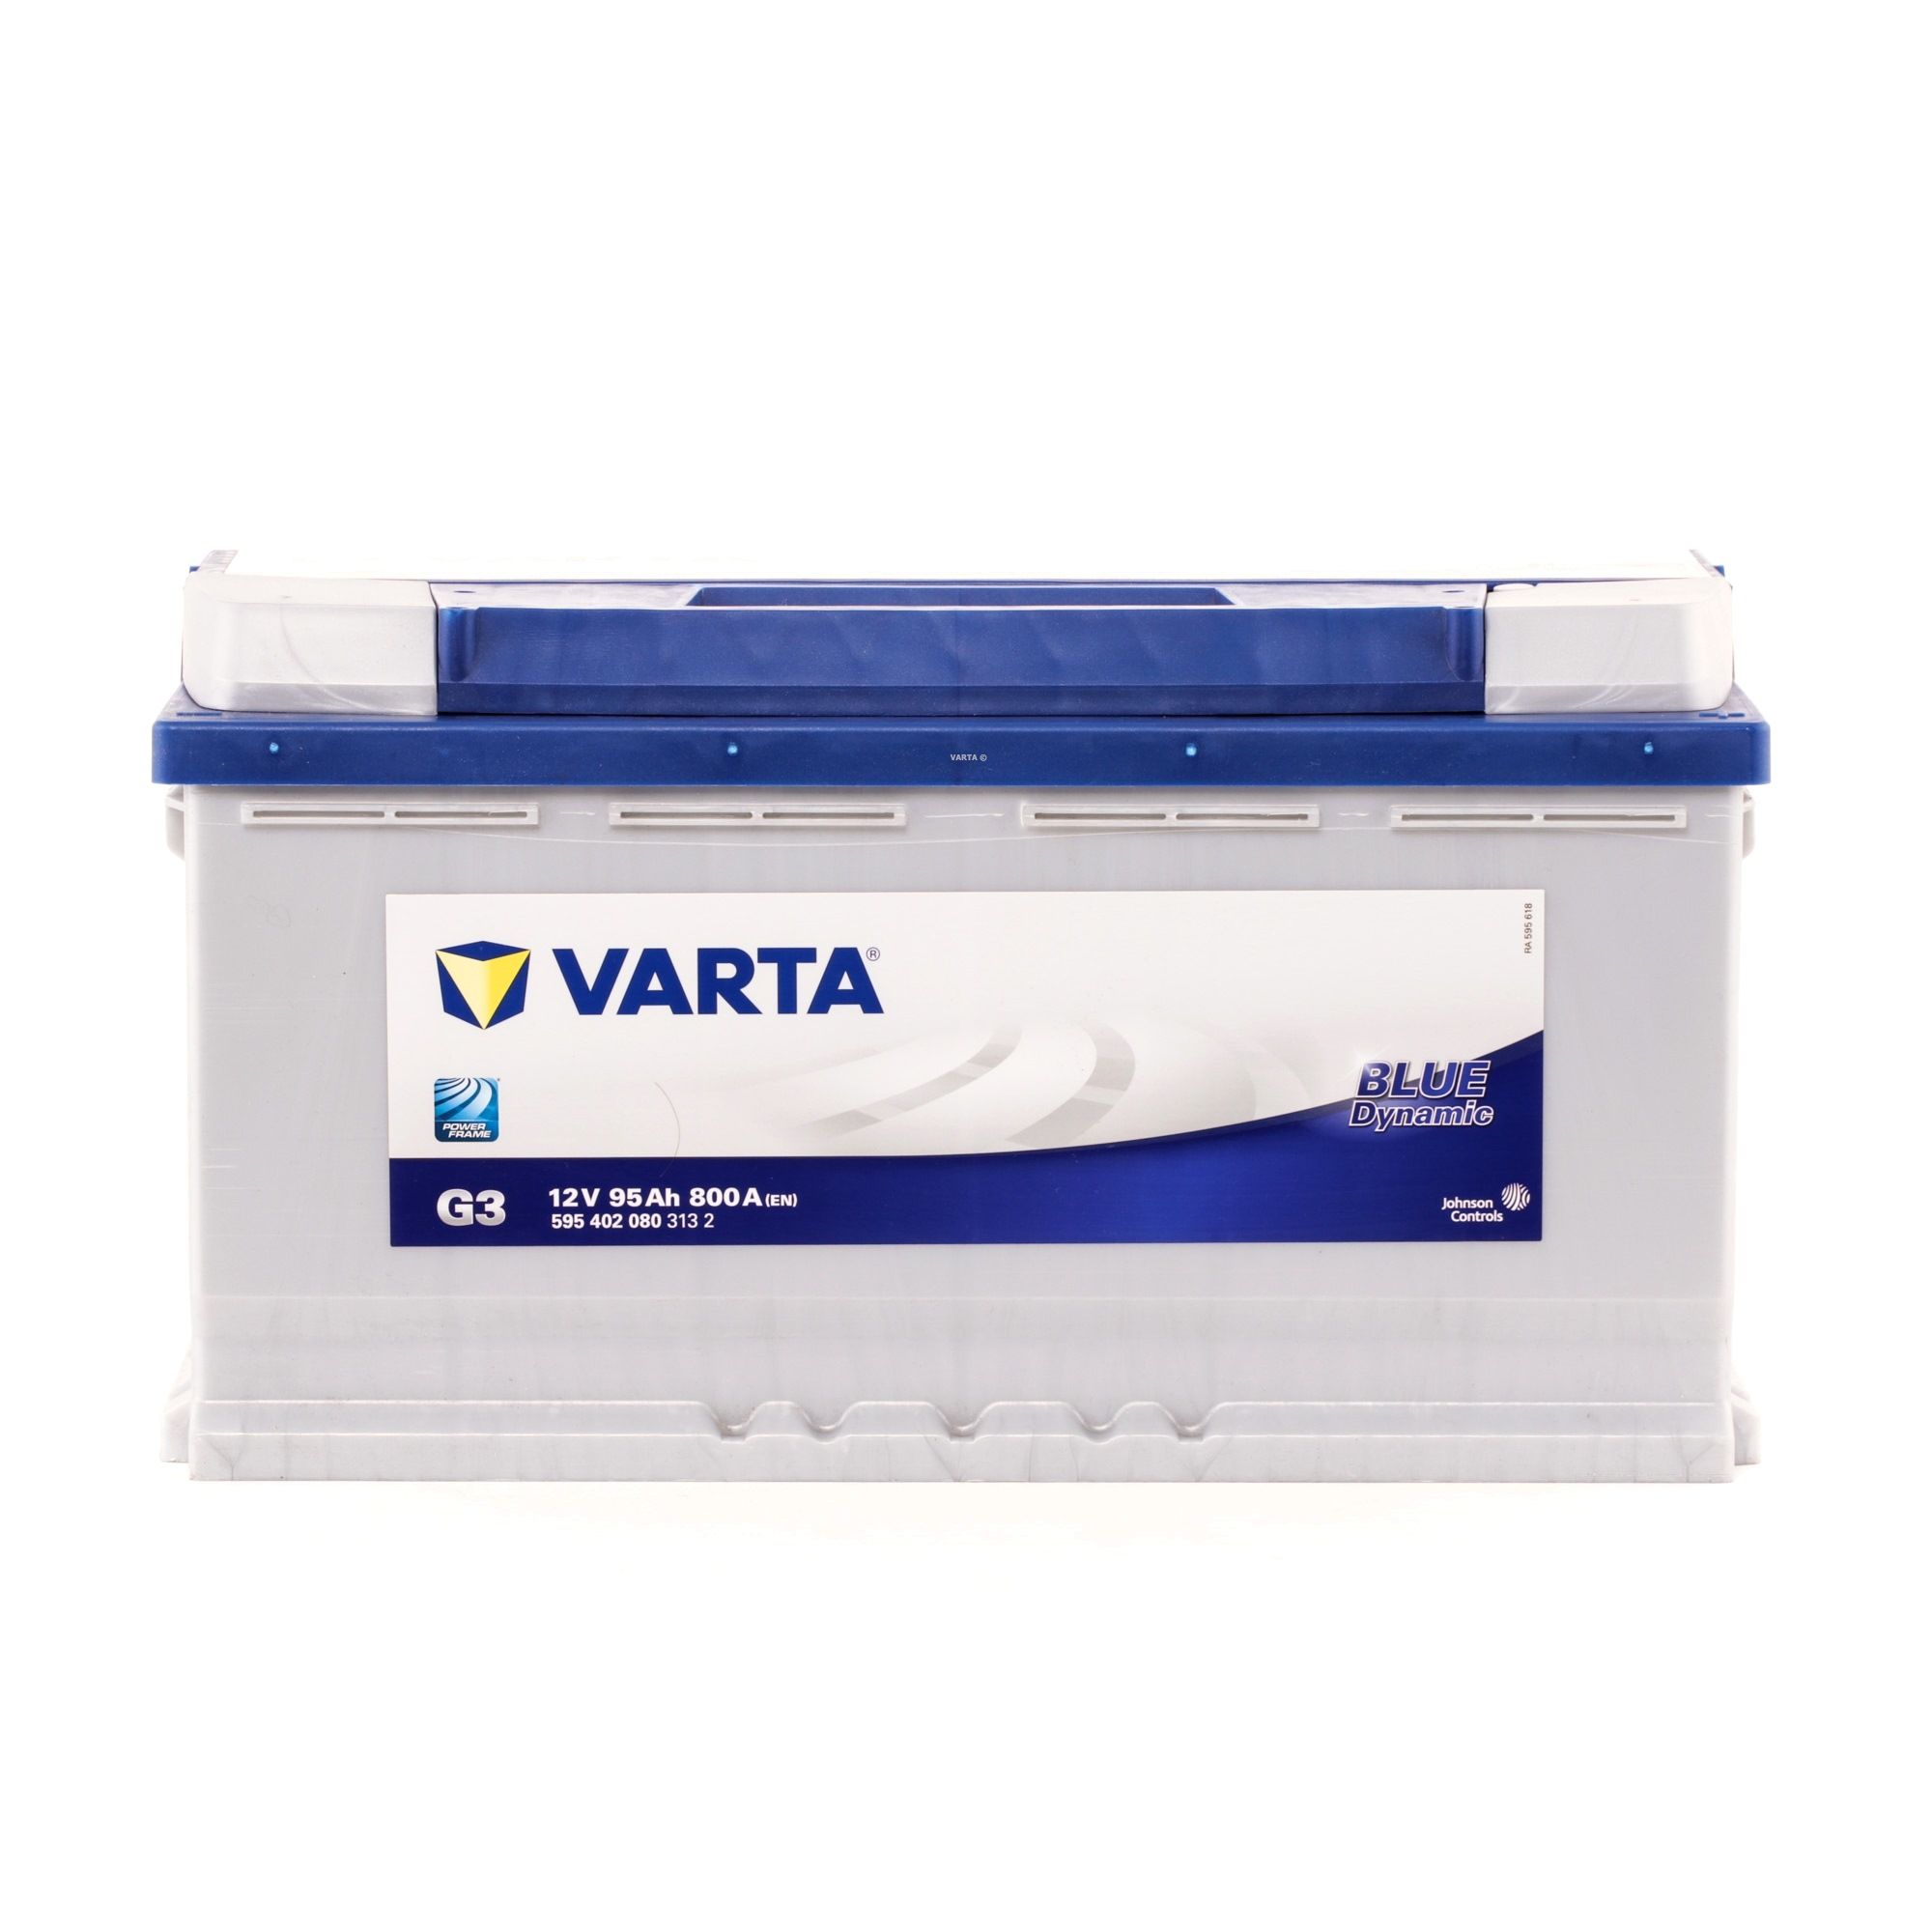 G3 VARTA BLUE dynamic G3 5954020803132 Batterie auxiliaire 95Ah